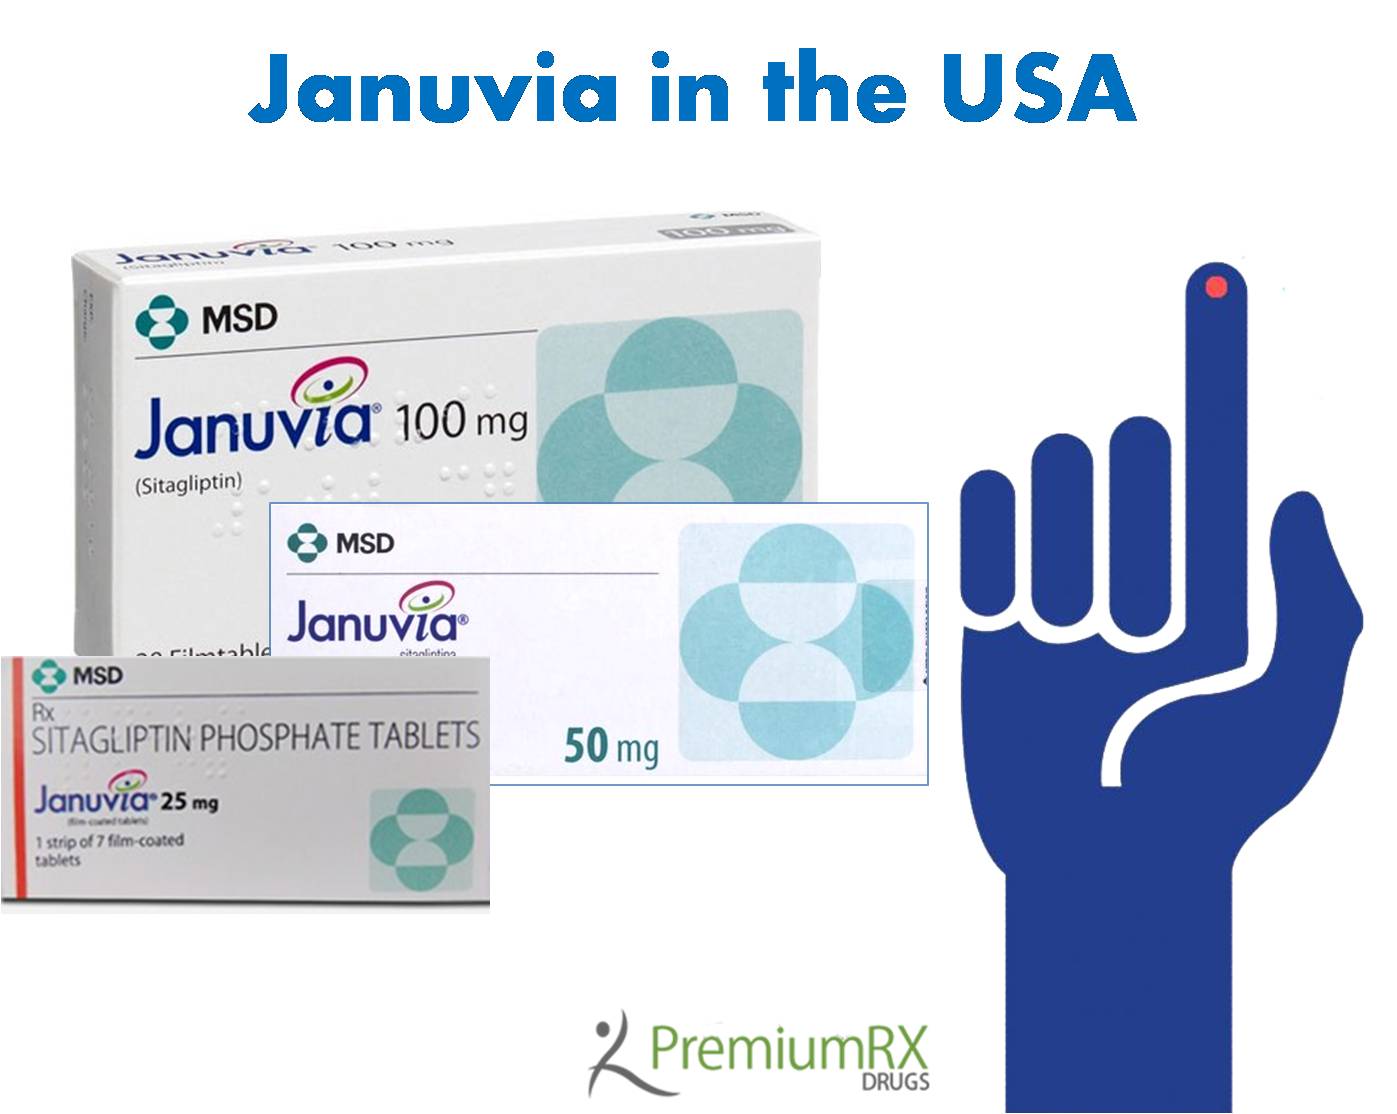 Where to Buy Januvia in the USA